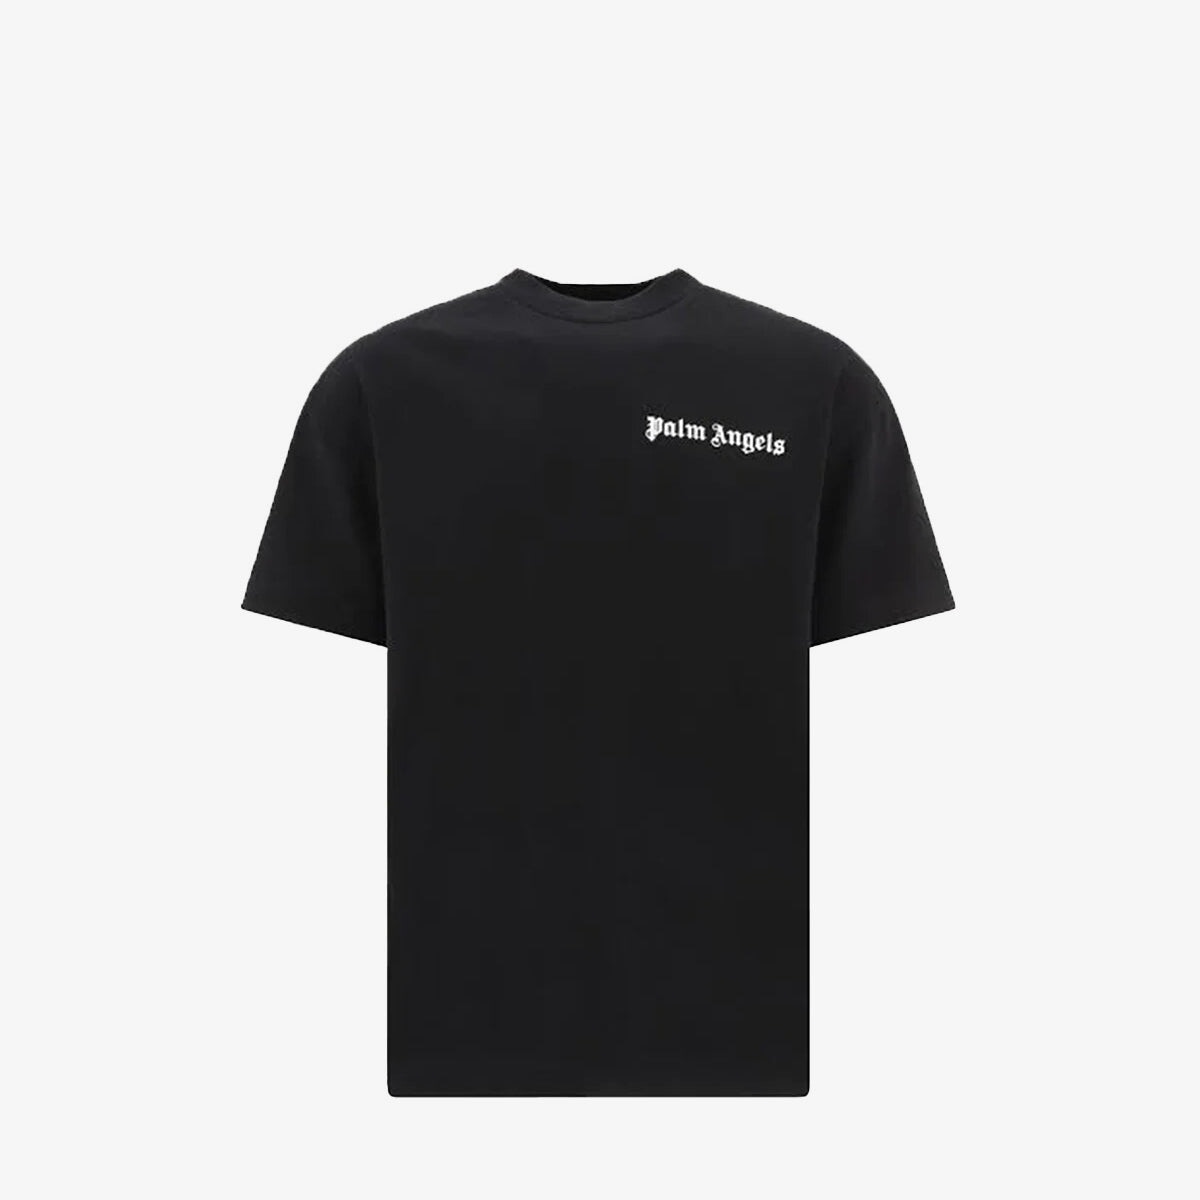 Palm Angels T-Shirt “Black” – Plug and Play